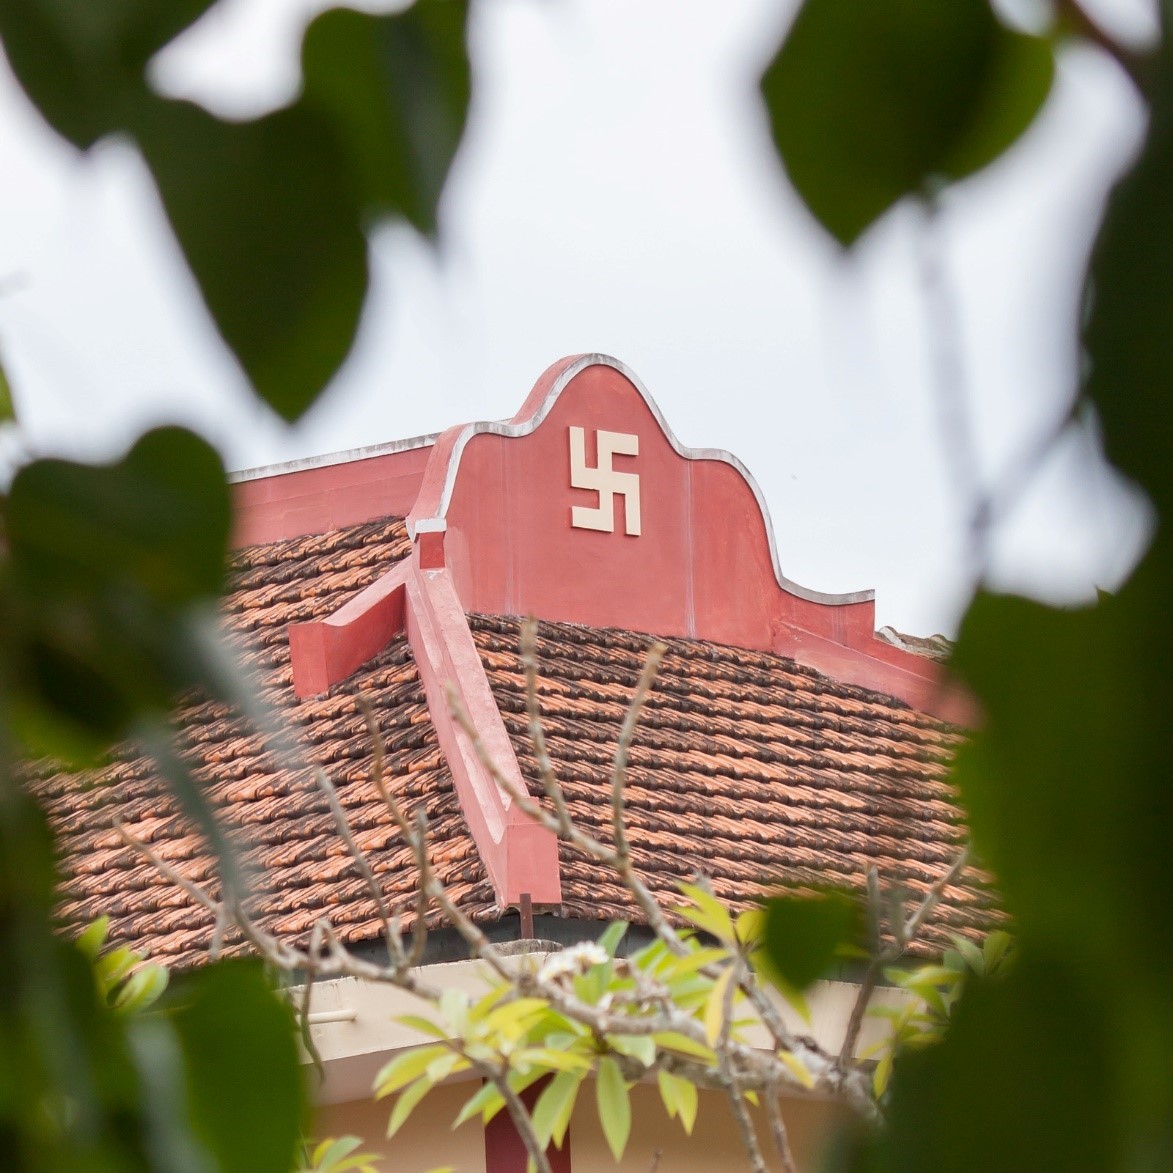 Swastika symbol on temple roof, viewed through trees